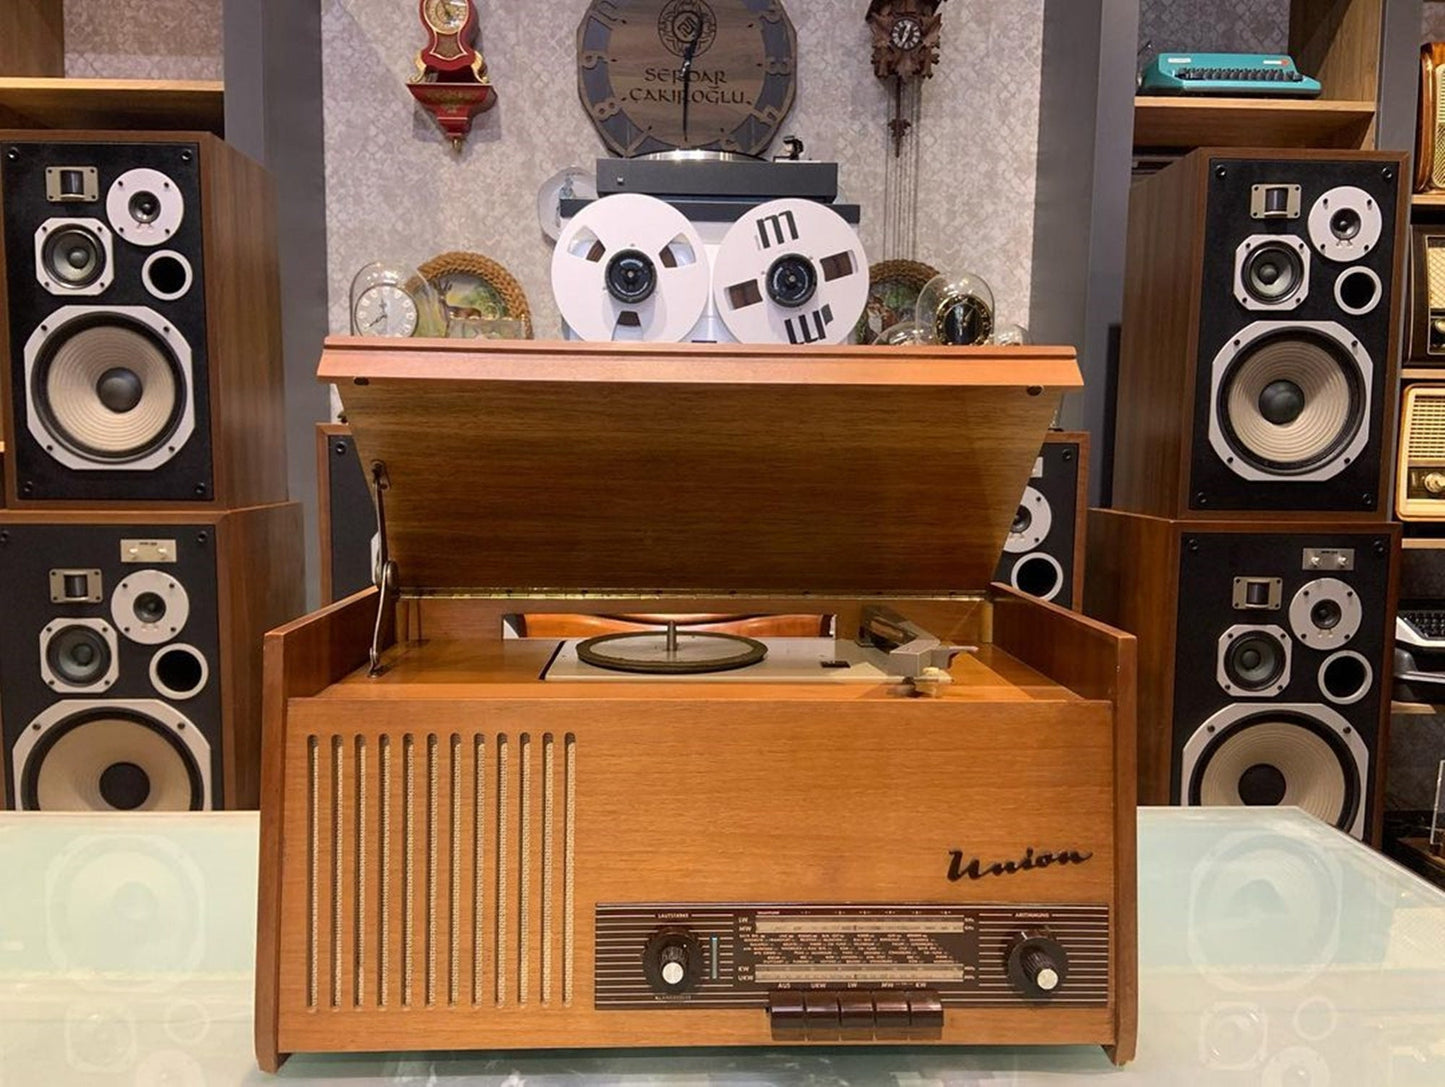 Germany Union Lamp Radio With Pikap| Vintage Radio | Orjinal Old Radio | Radio | Lamp Radio |